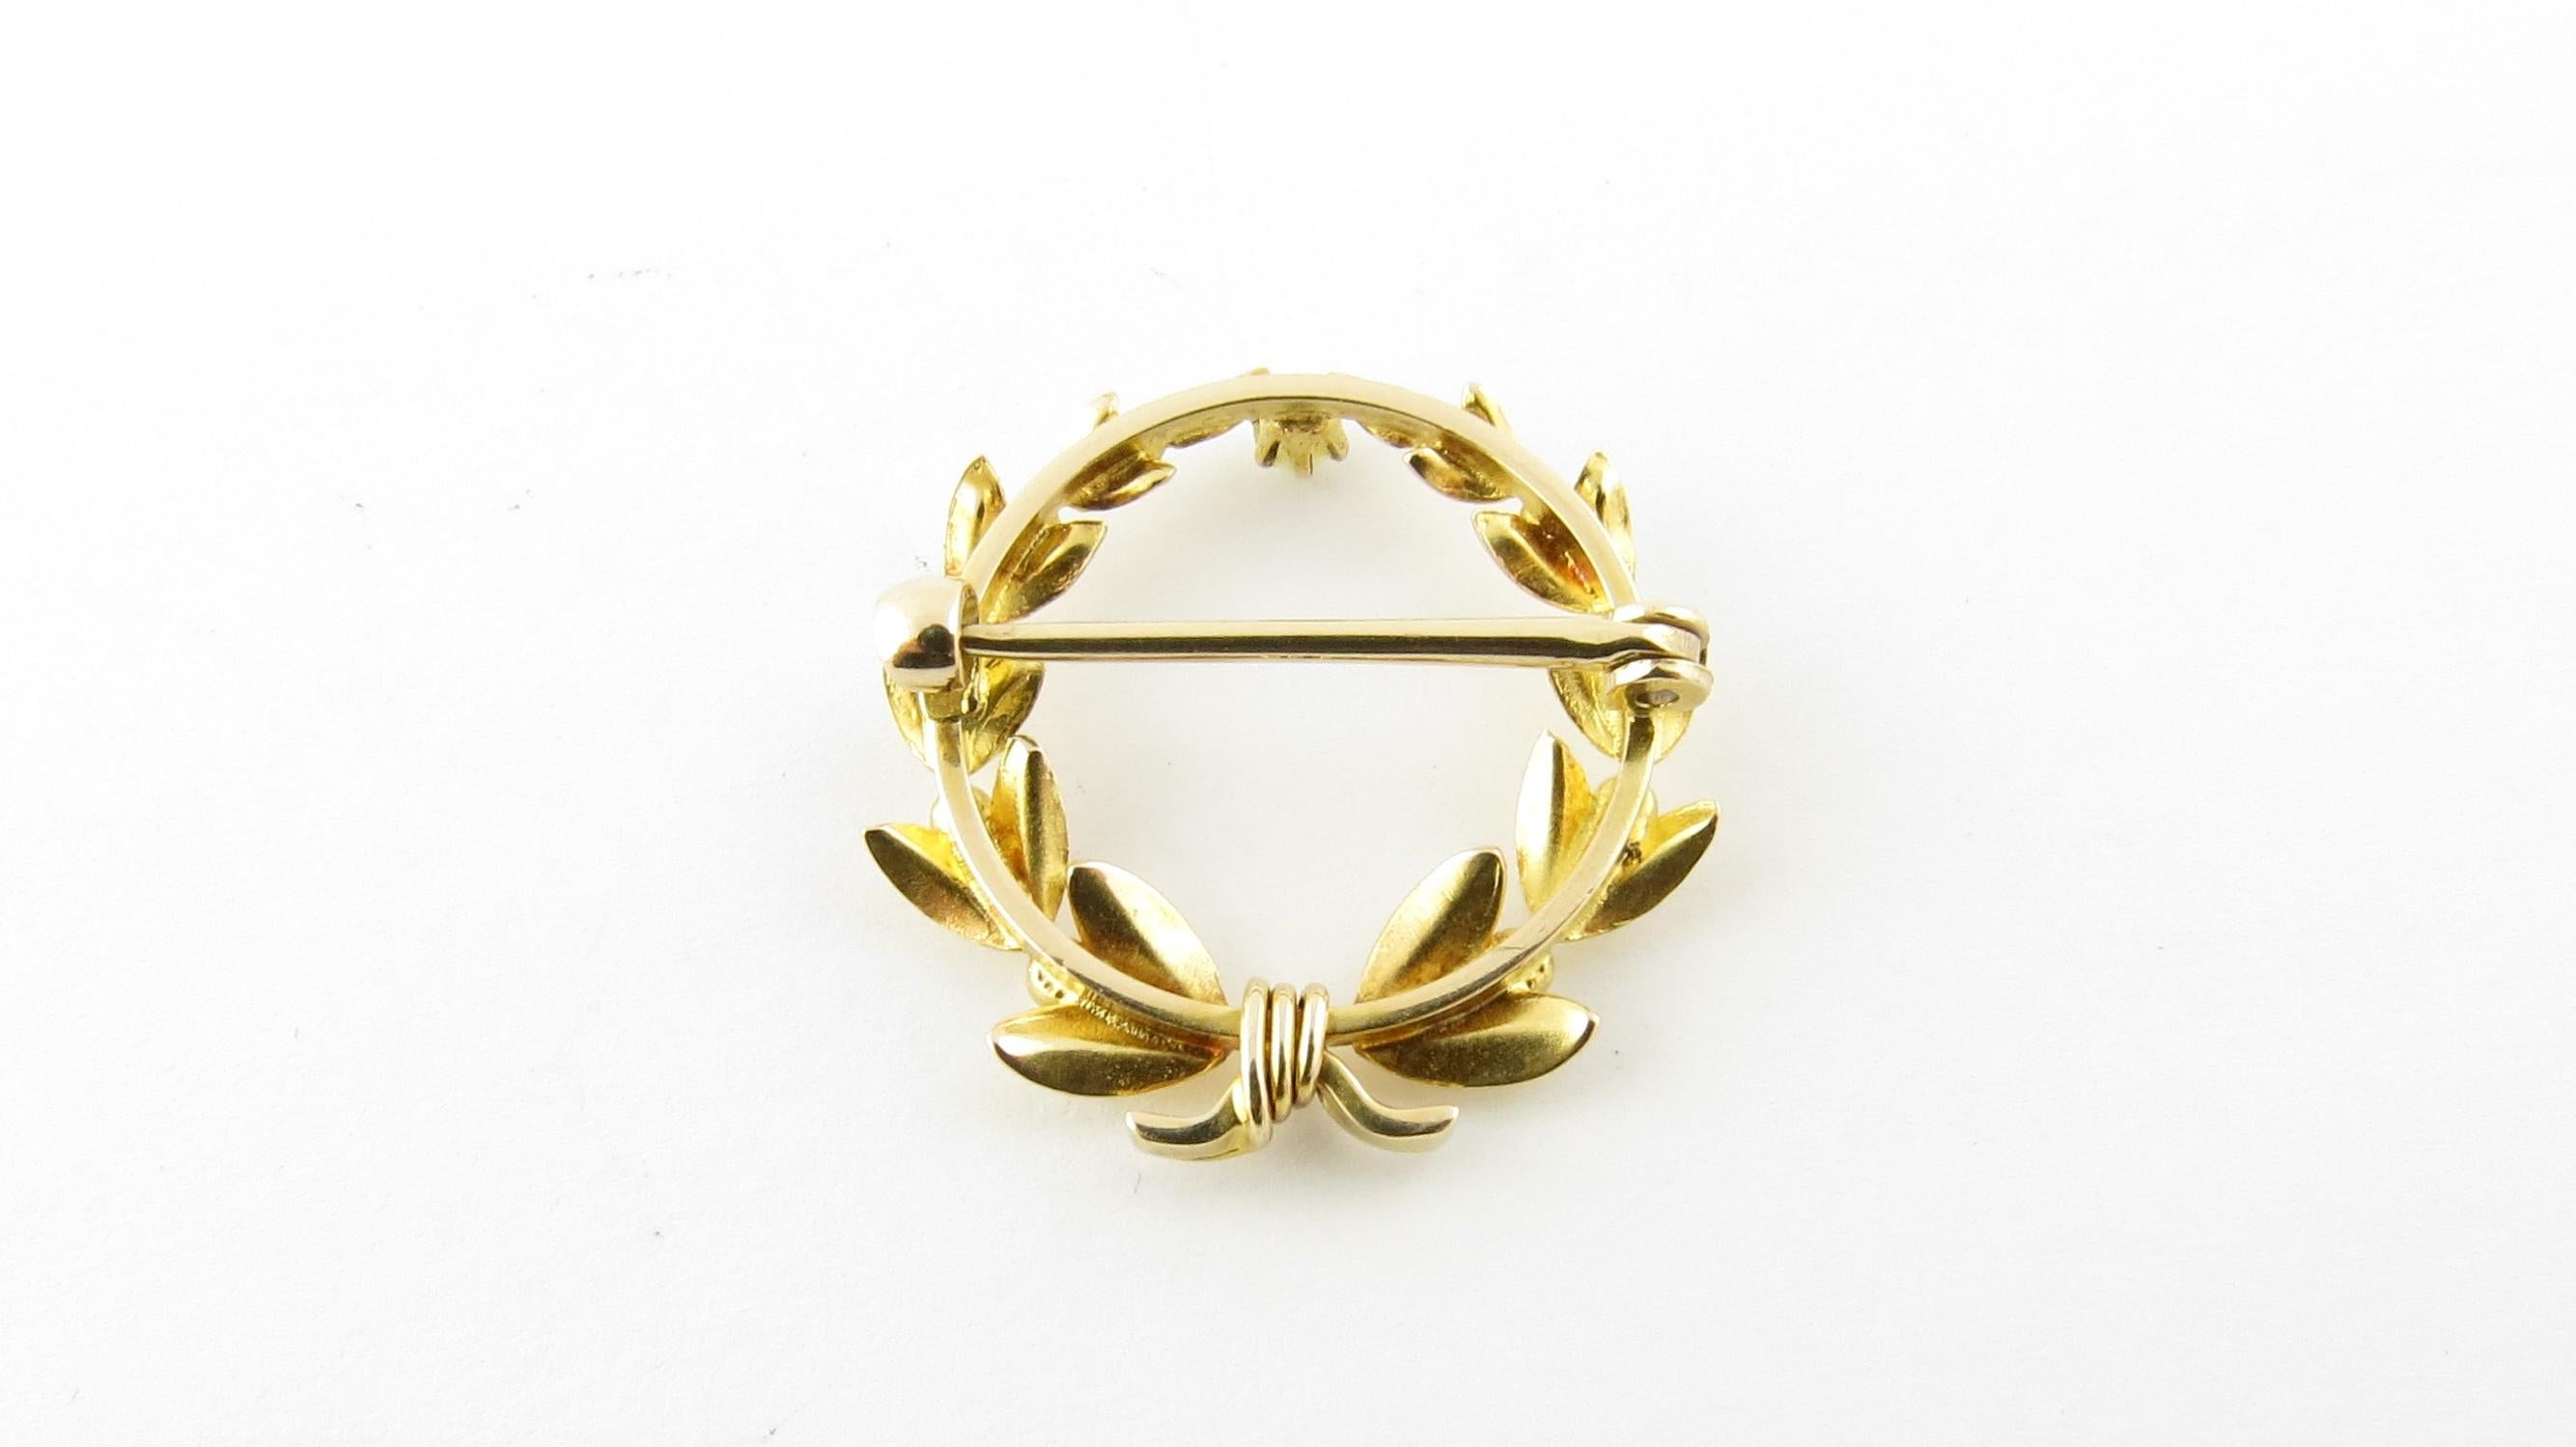 10 Karat Yellow Gold Wreath Pin or Brooch 1